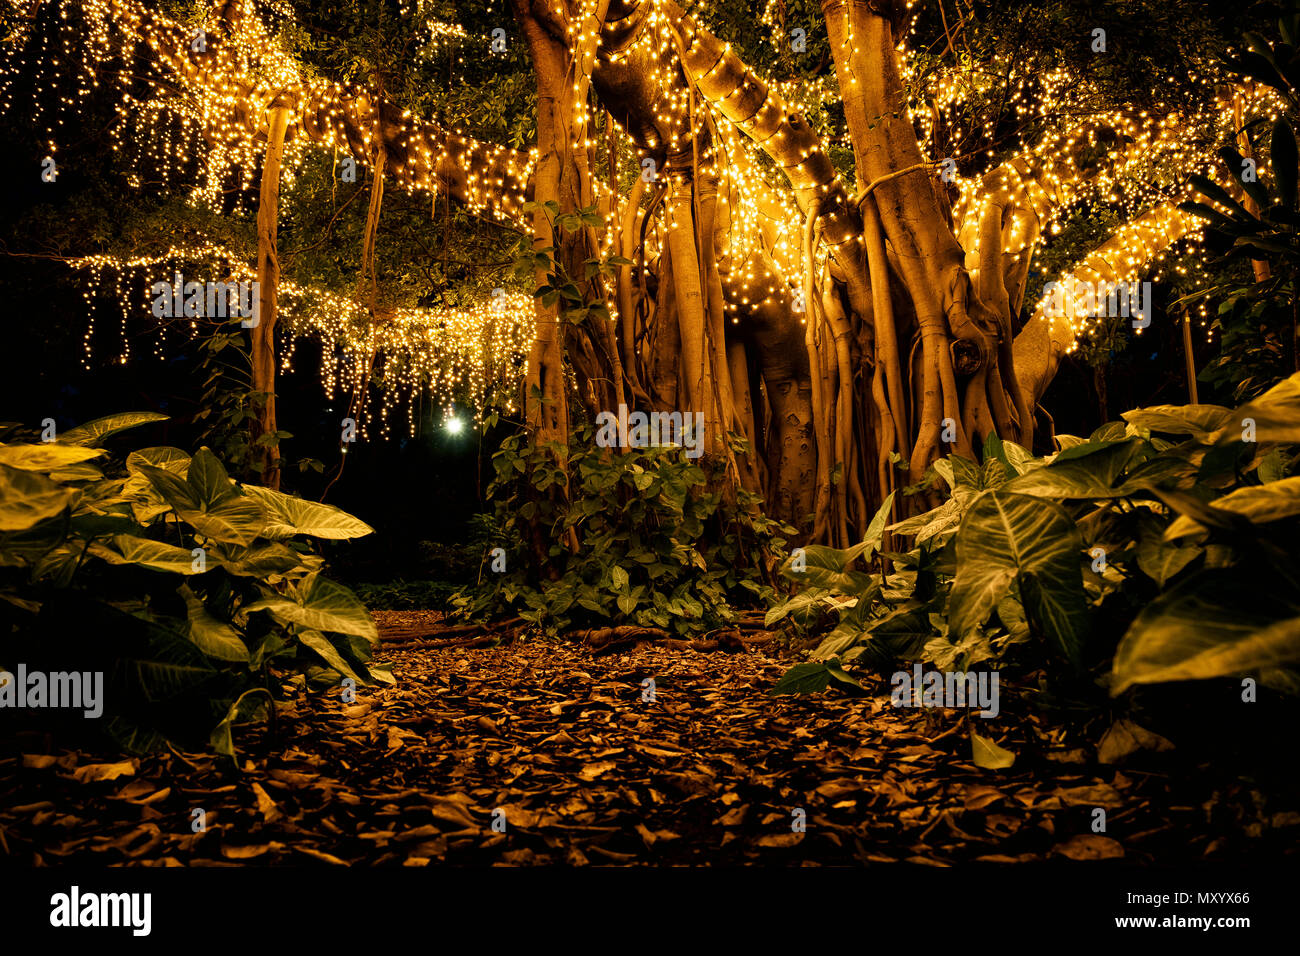 Festa degli alberi illuminati - Brisbane, Queensland, Australia Foto Stock